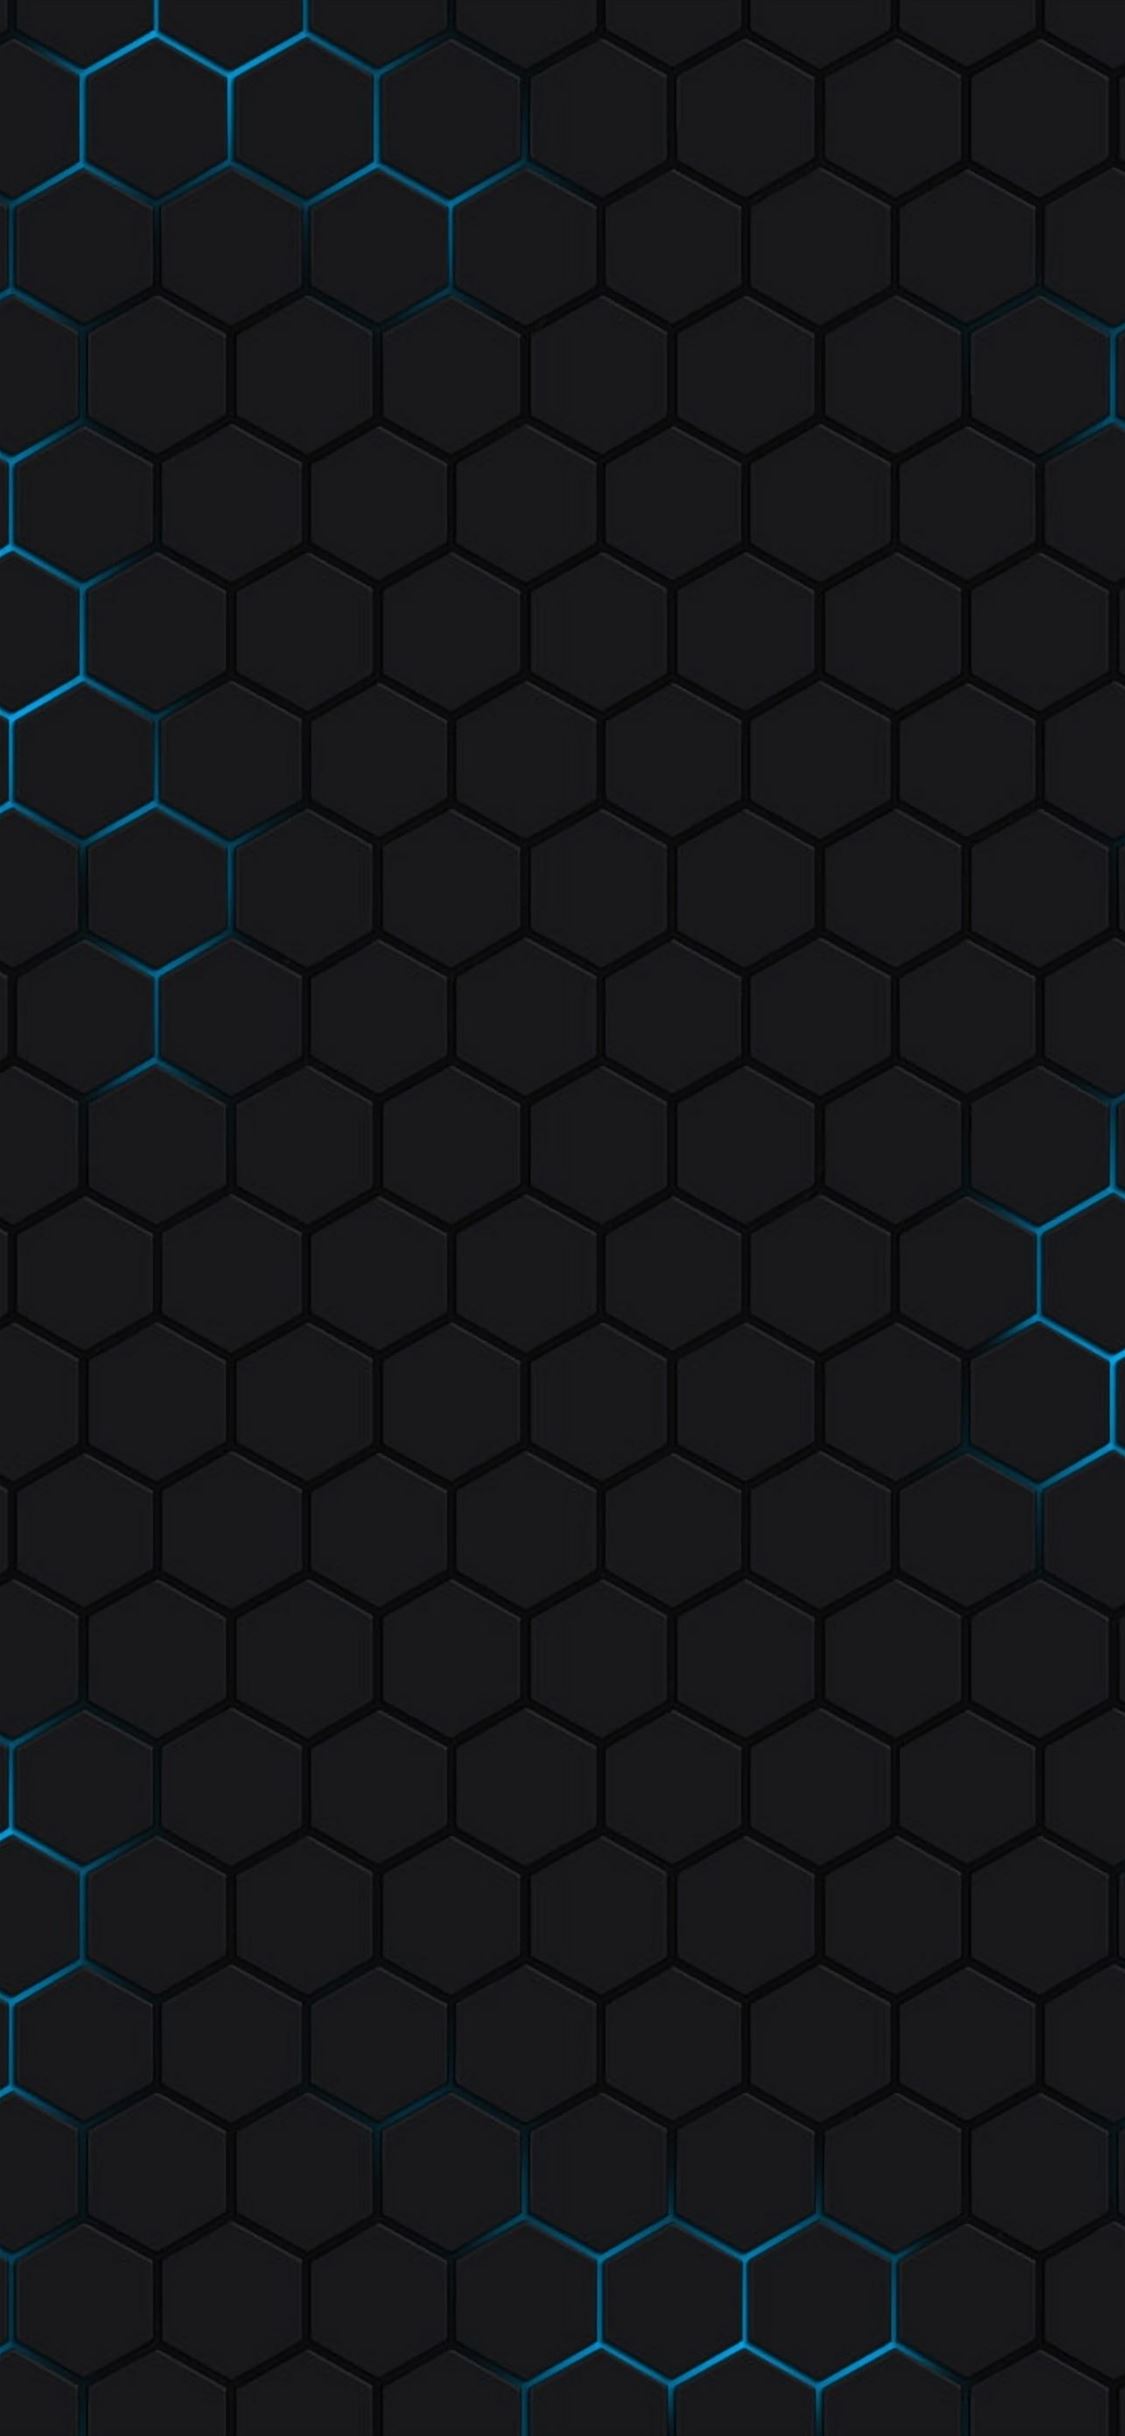 Hexagons Abstract iPhone wallpaper 